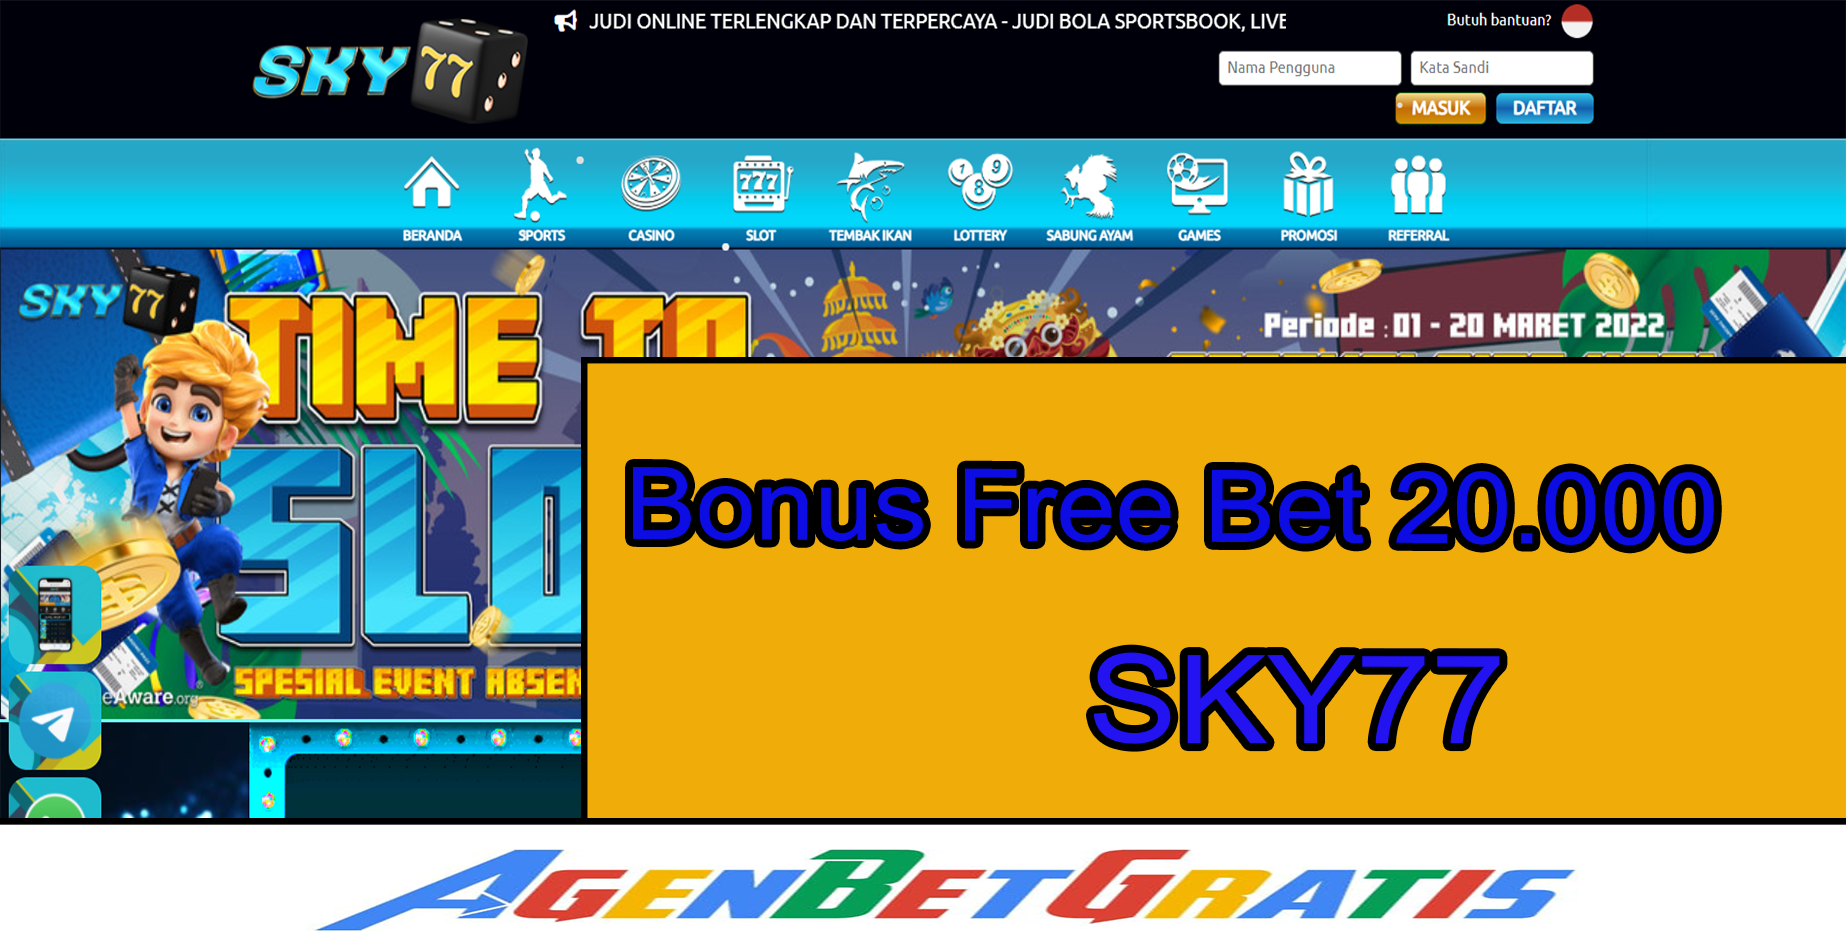 SKY77 - Bonus FreeBet 20.000